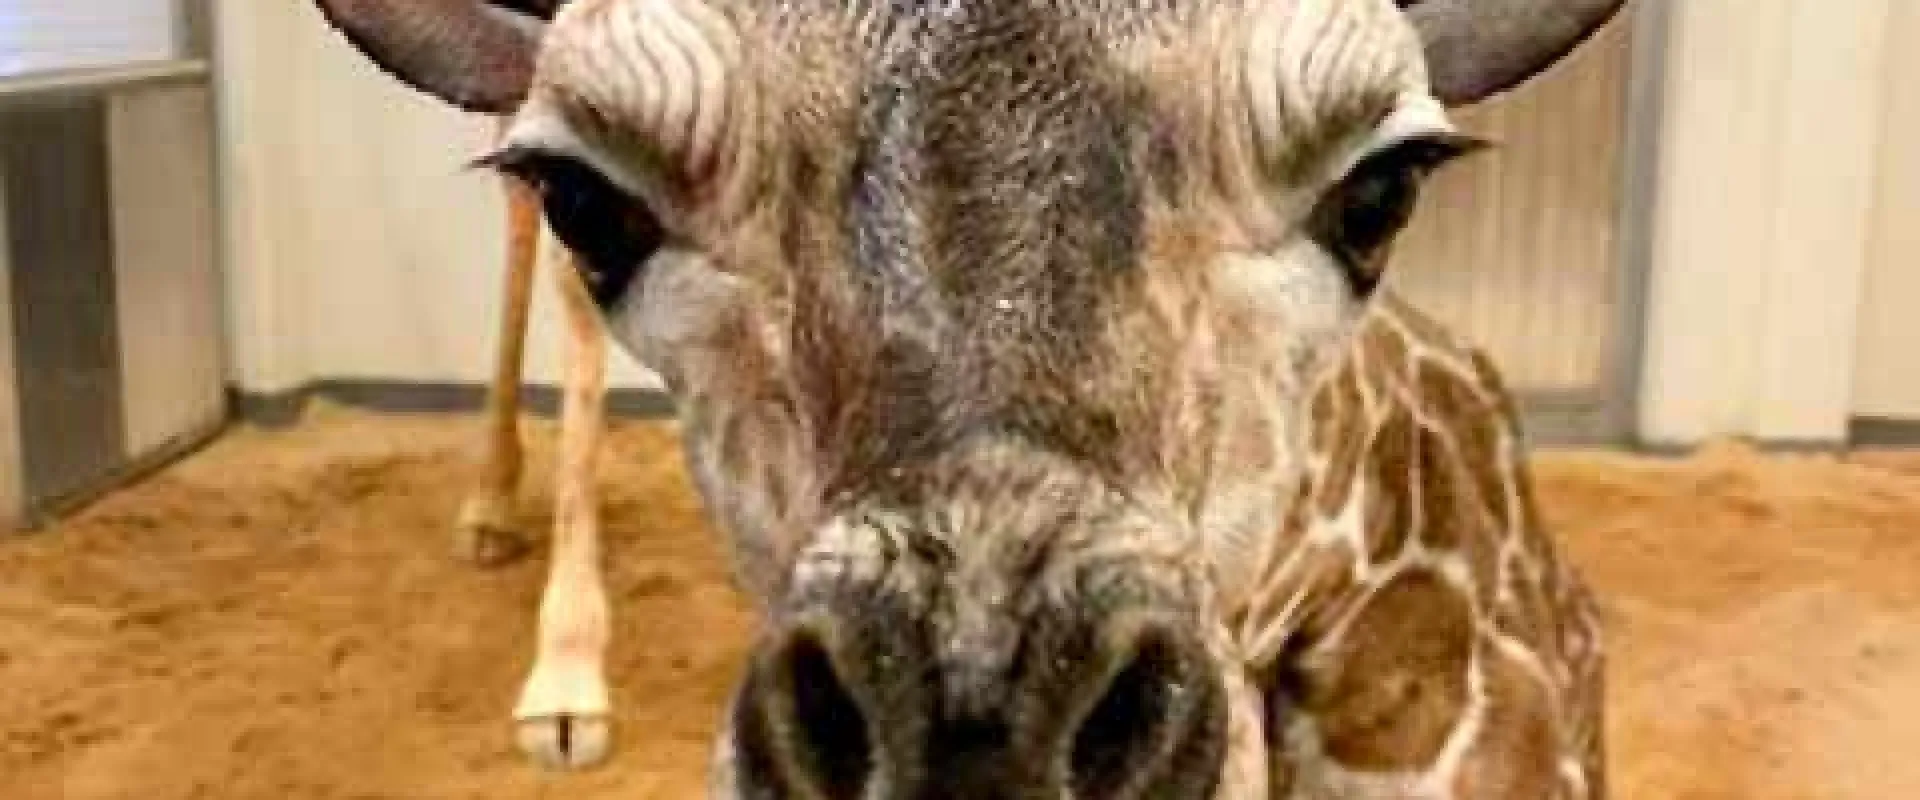 It’s a boy! North Carolina Zoo Welcomes a Giraffe Calf 